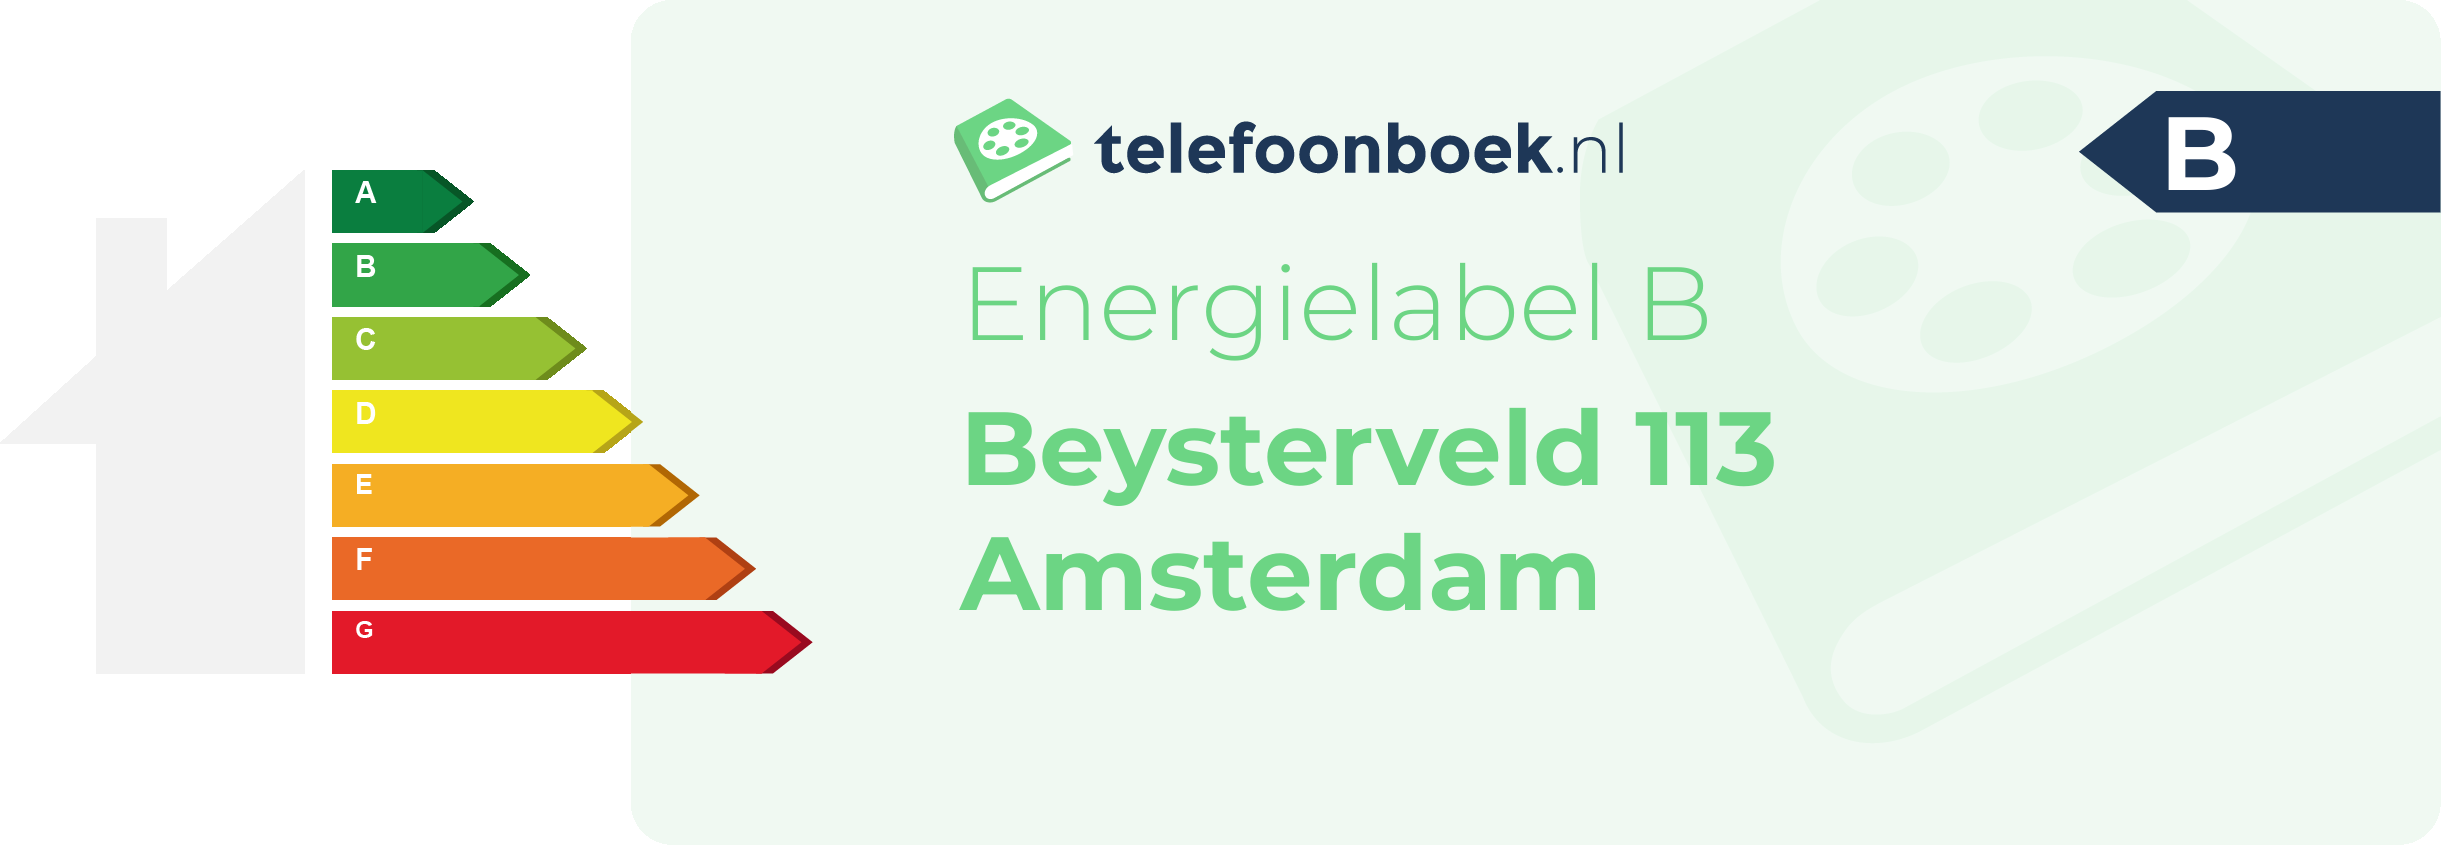 Energielabel Beysterveld 113 Amsterdam